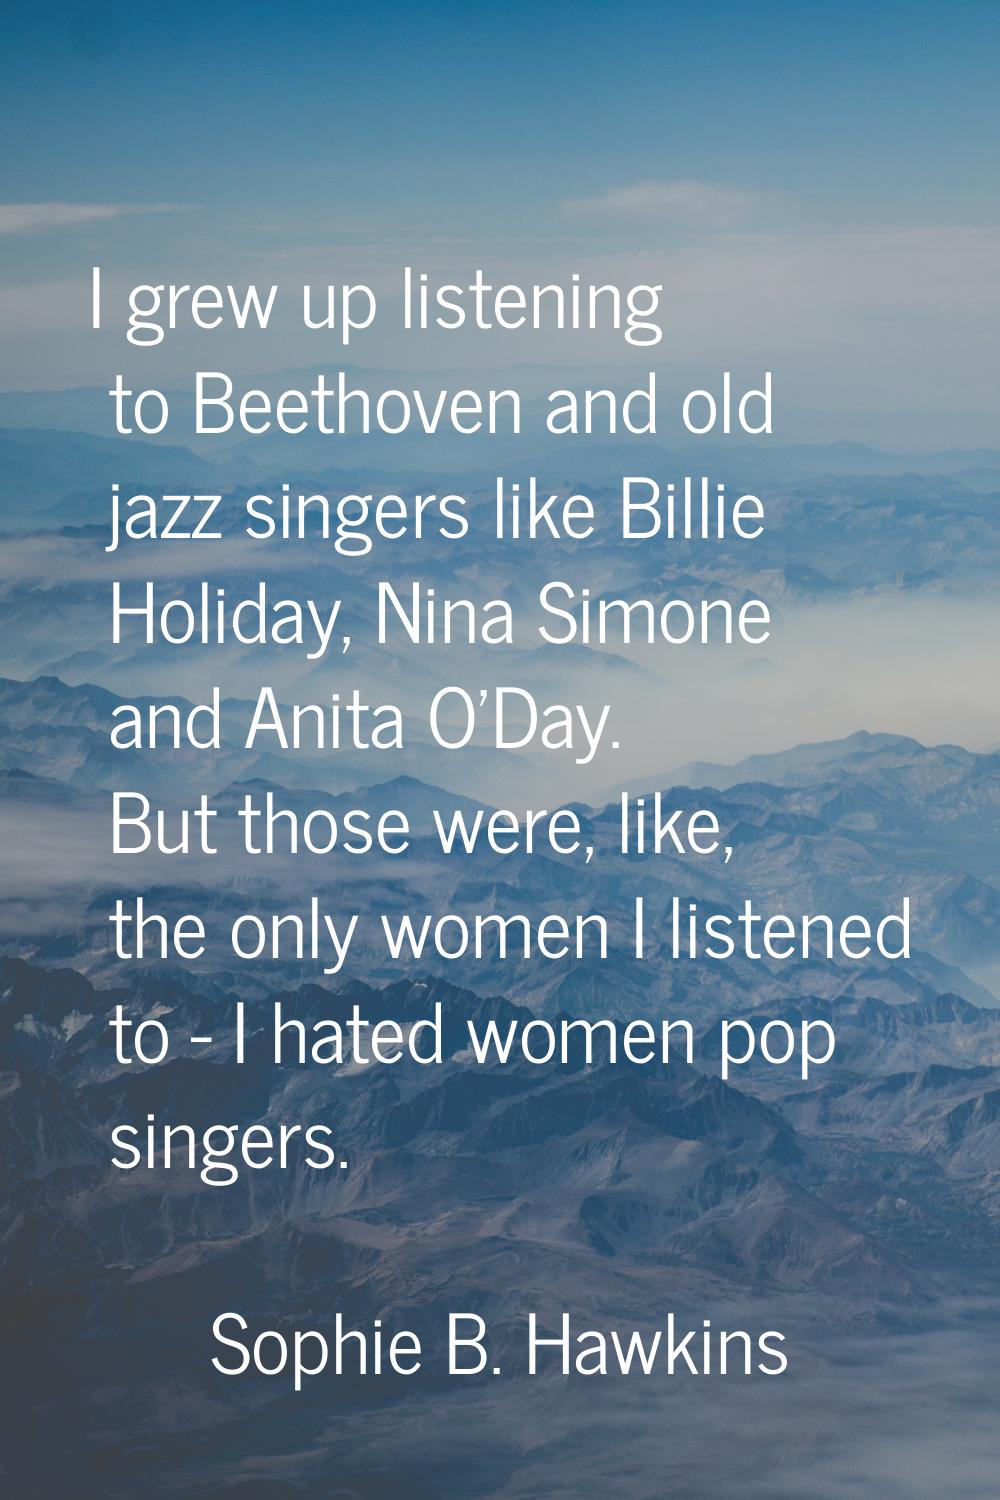 I grew up listening to Beethoven and old jazz singers like Billie Holiday, Nina Simone and Anita O'